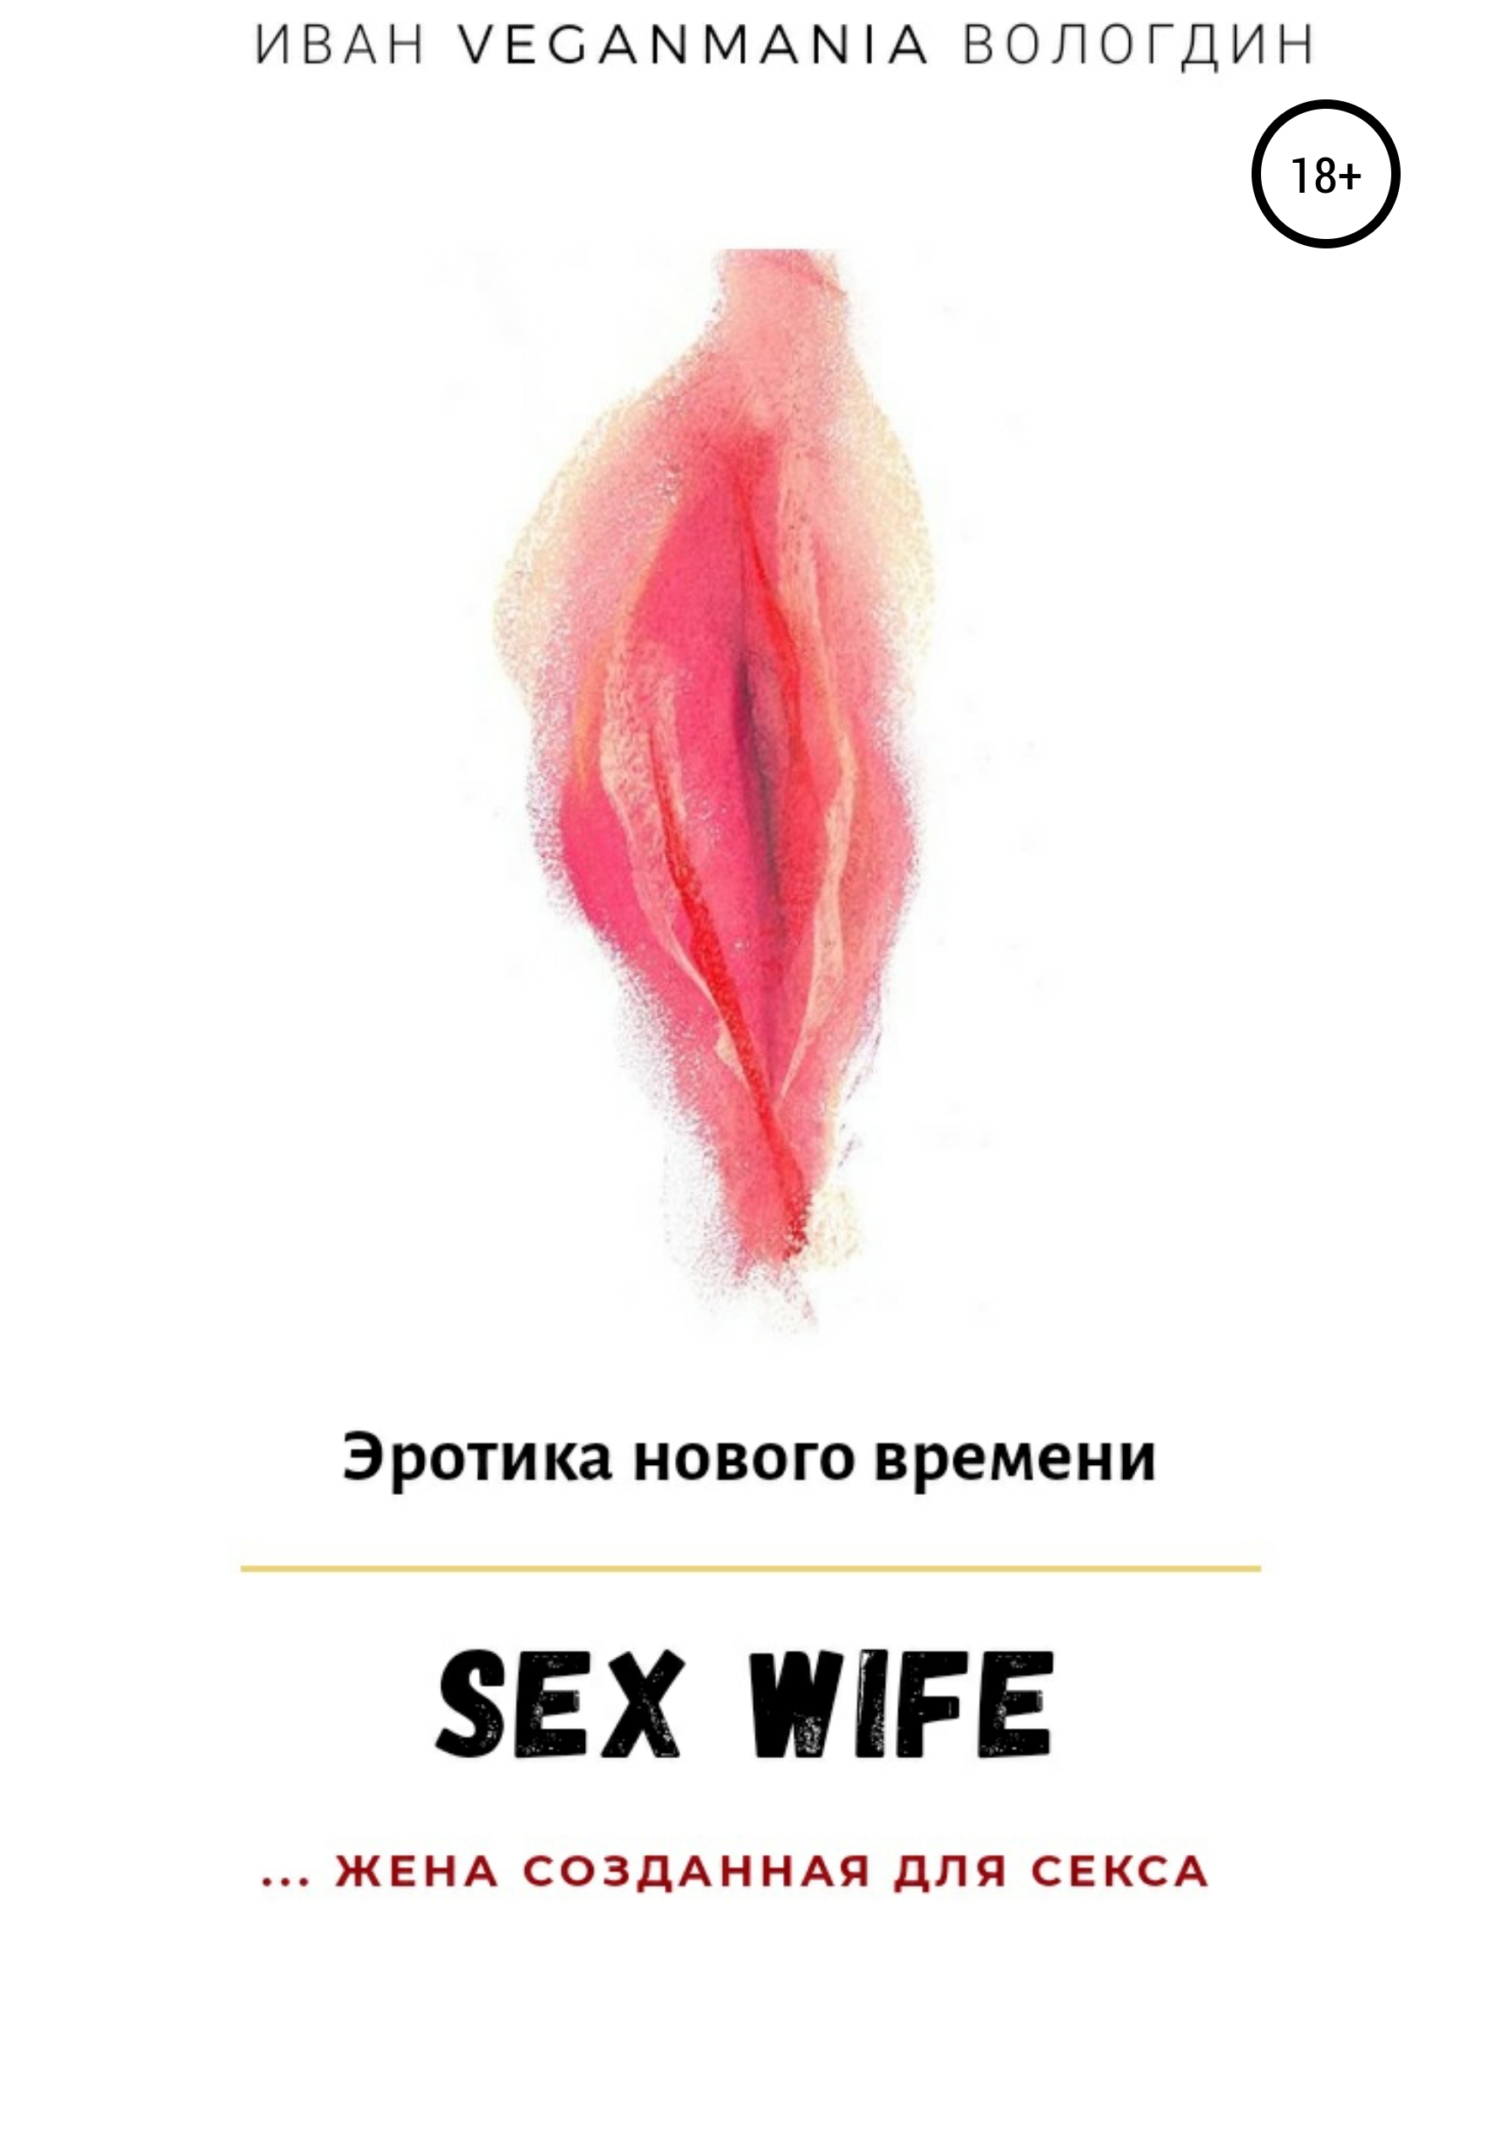 Секс с другой при жене: порно видео на заточка63.рф